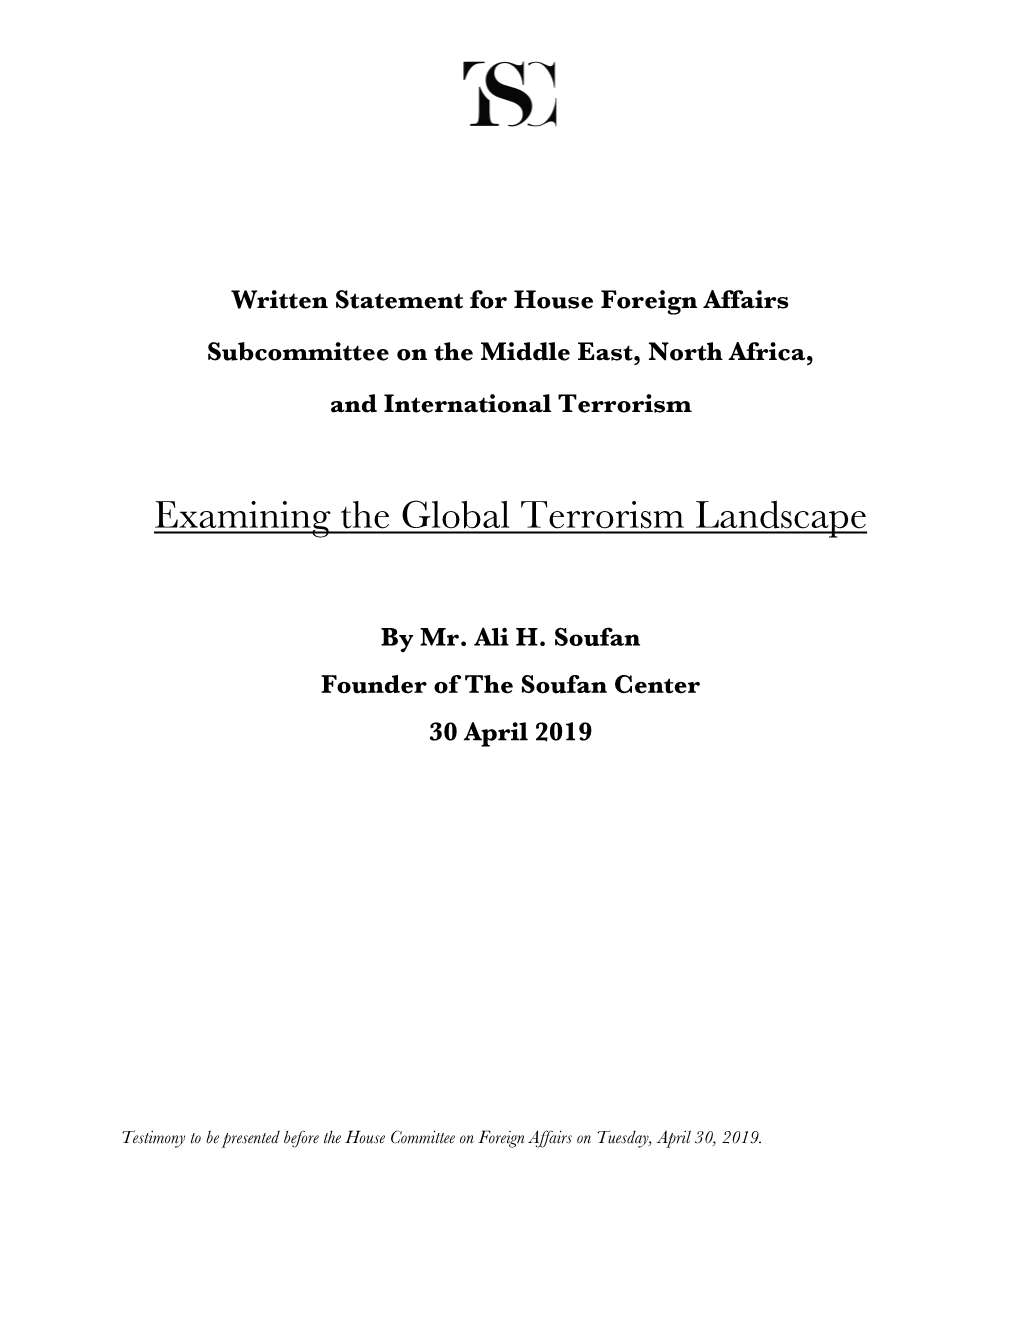 Examining the Global Terrorism Landscape